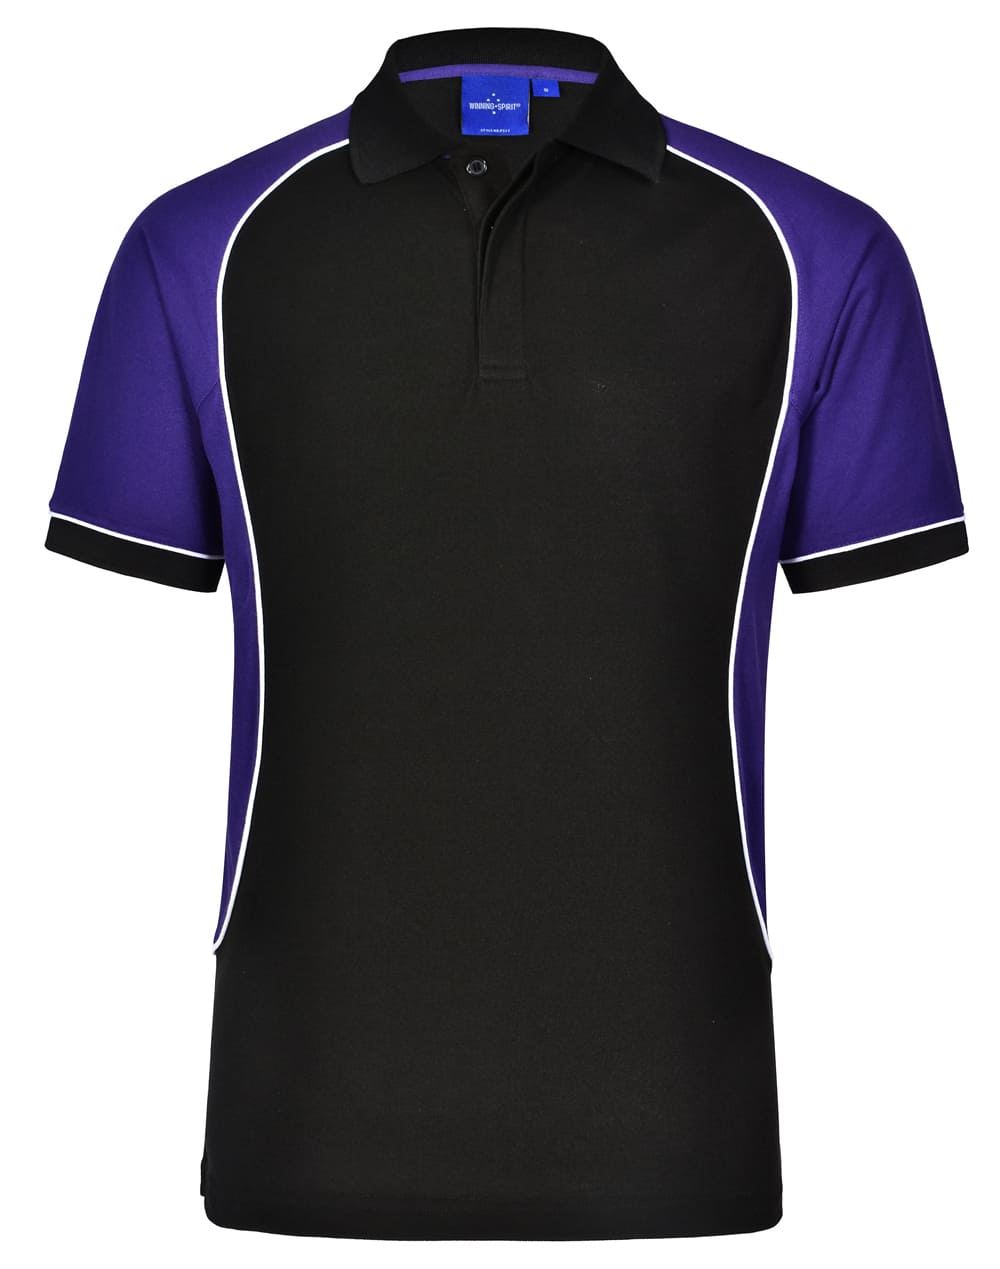 Custom Printed Mens Arena (Black, White, Gold) Tri-Color Polo T-Shirts Online Australia